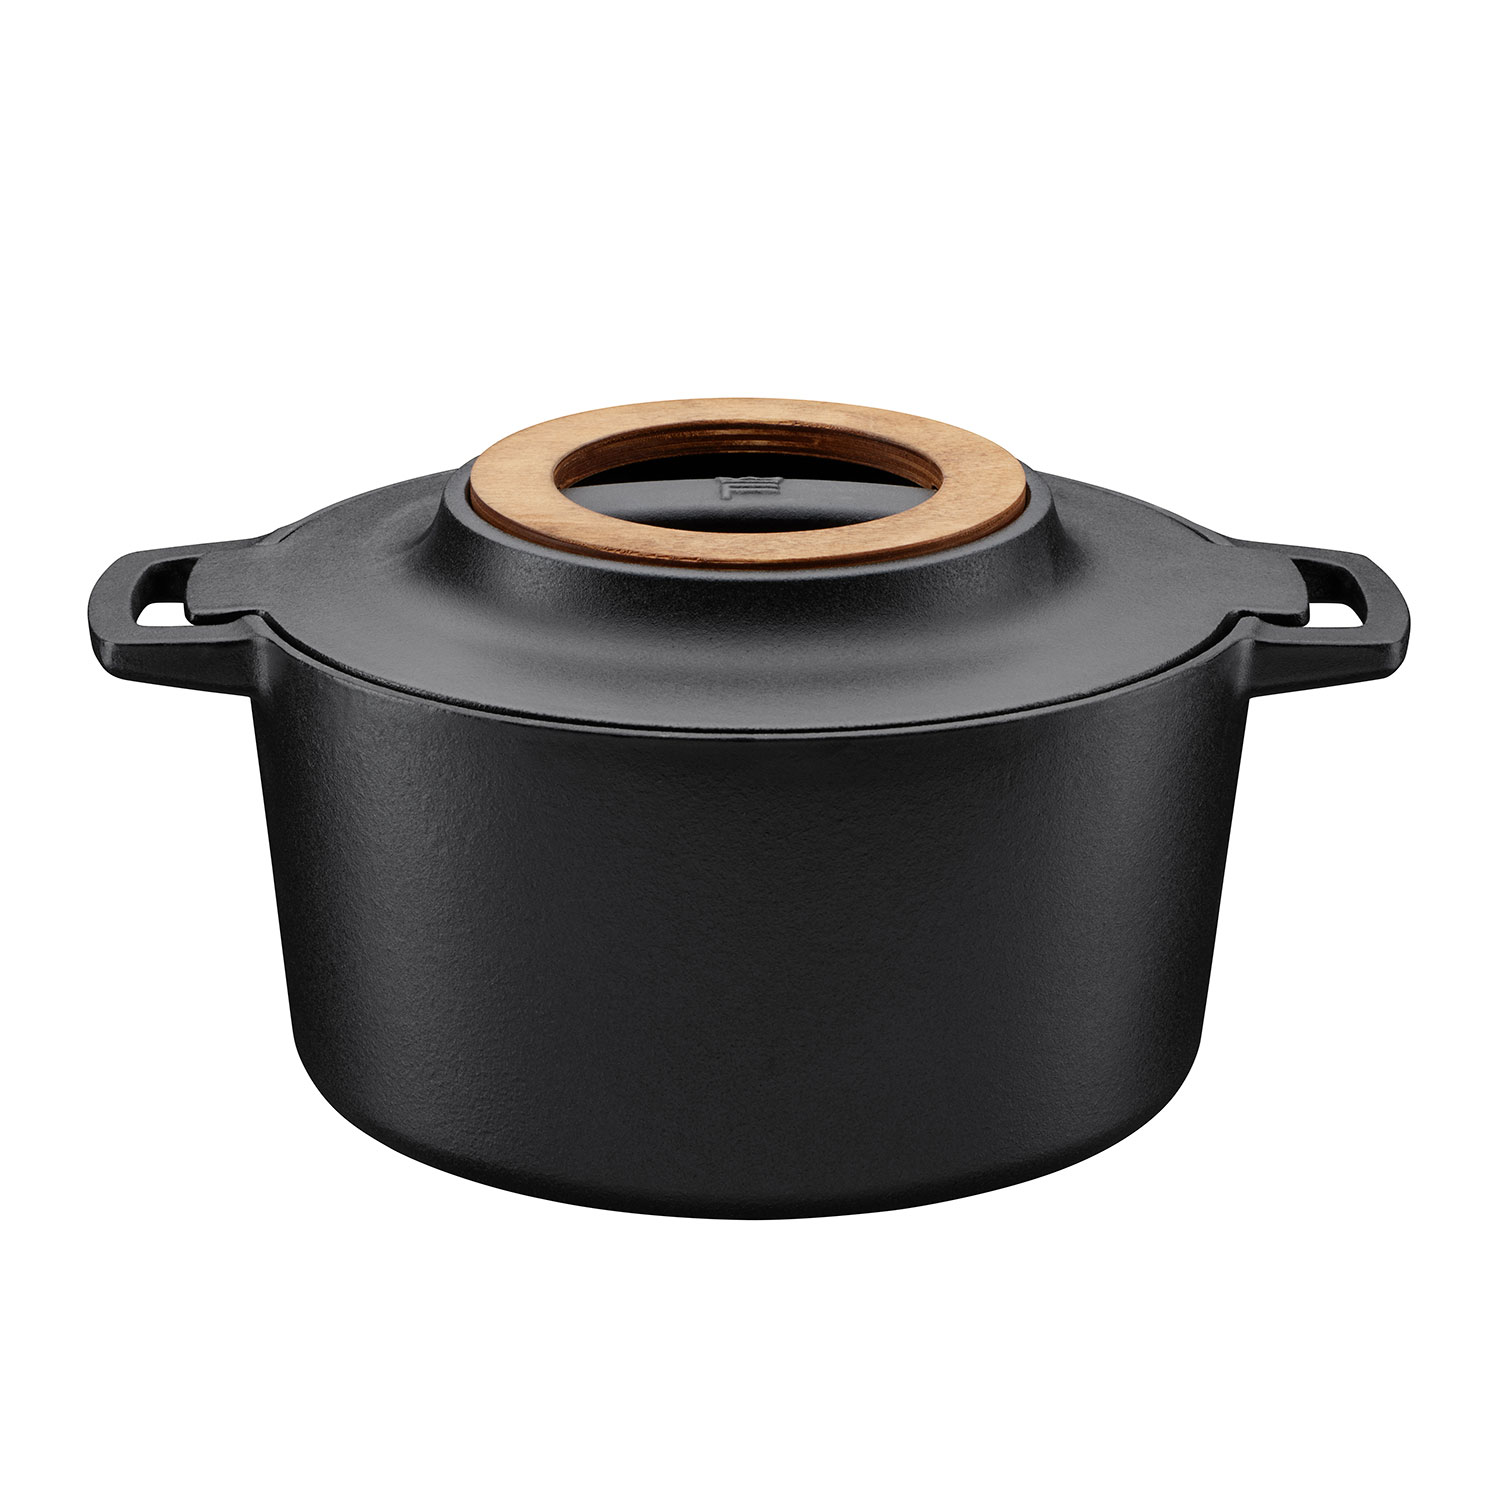 https://royaldesign.com/image/2/fiskars-norden-casserole-cast-iron-0